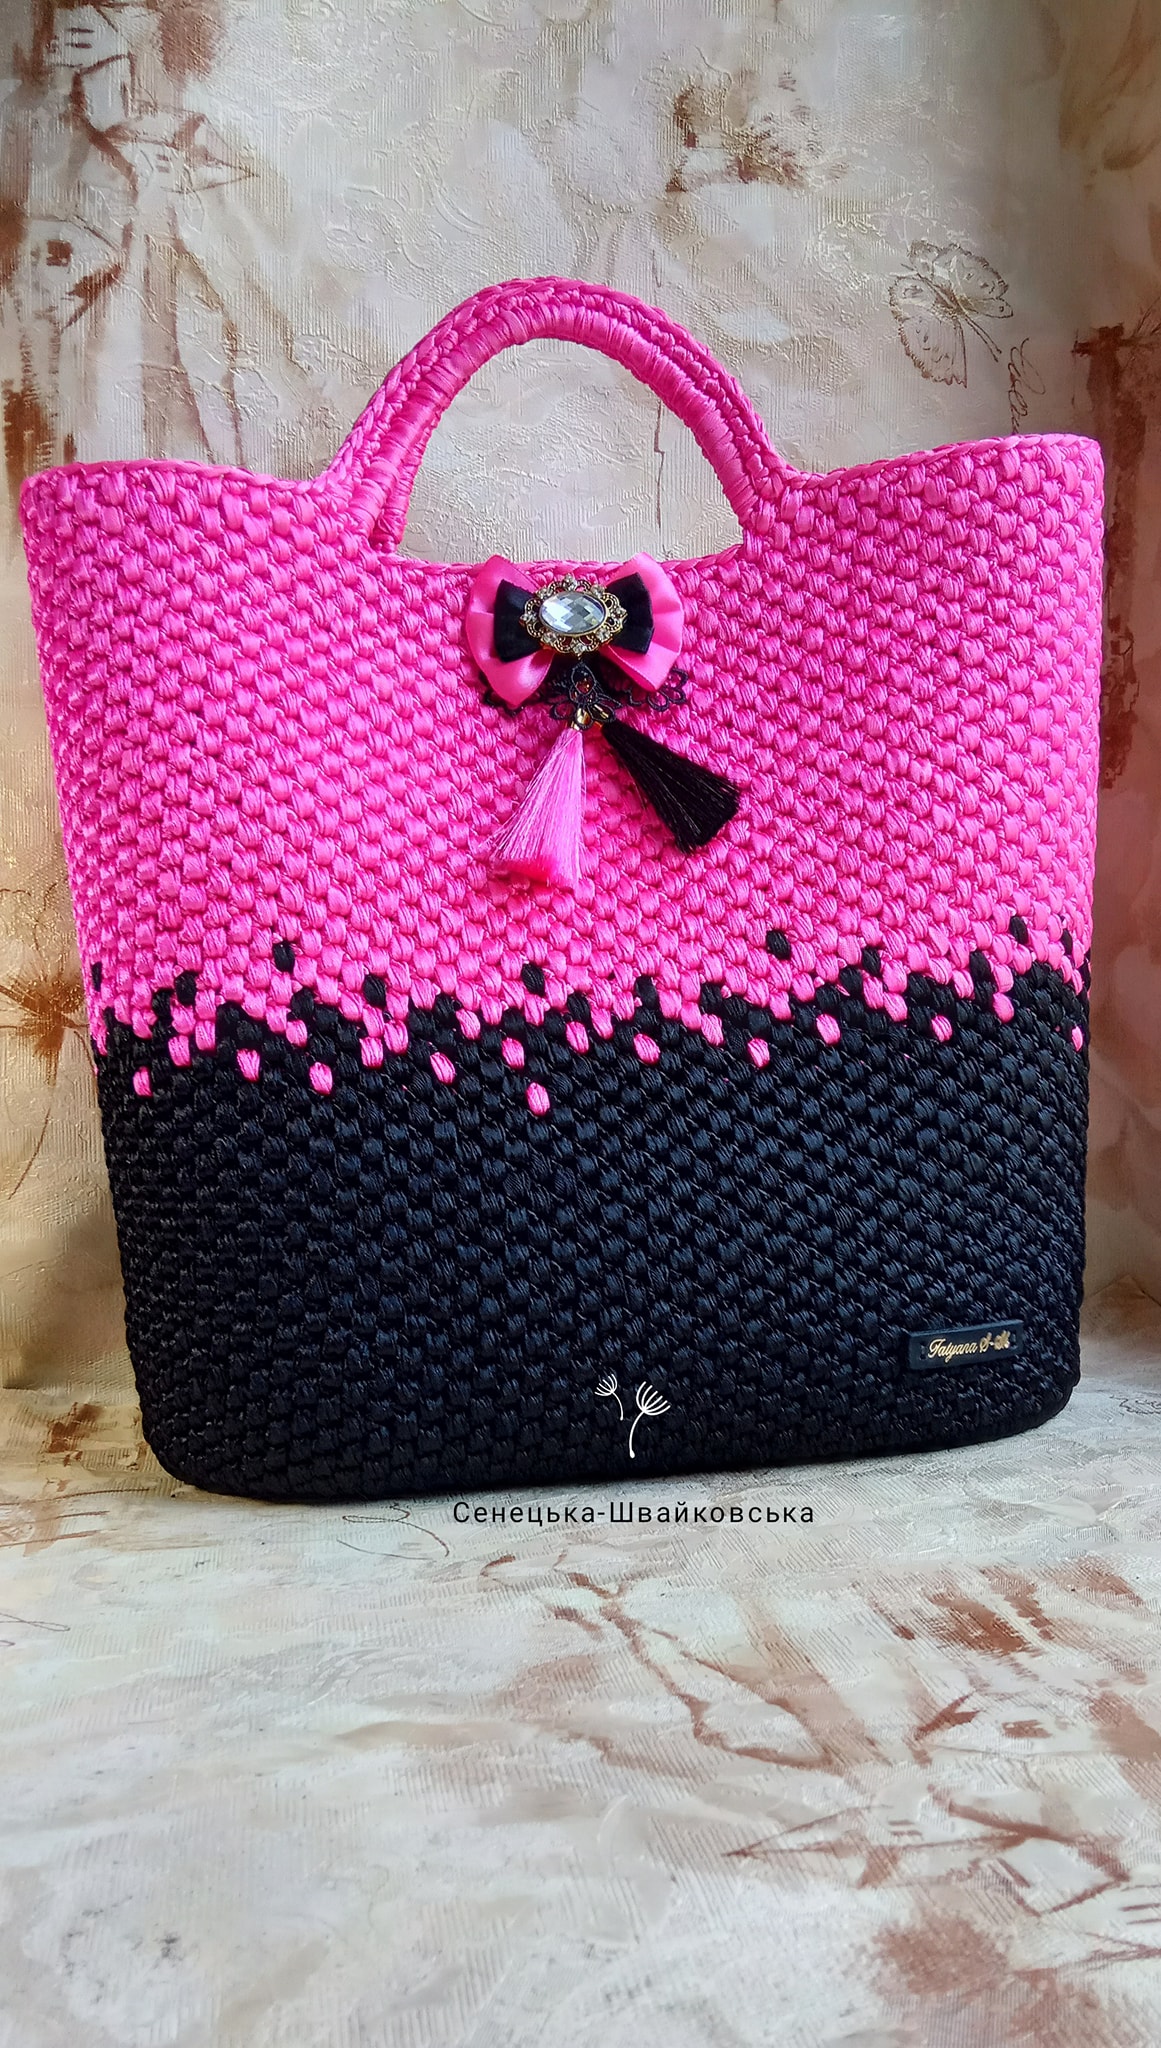 Crochet and Knitting: Amazing handmade bags